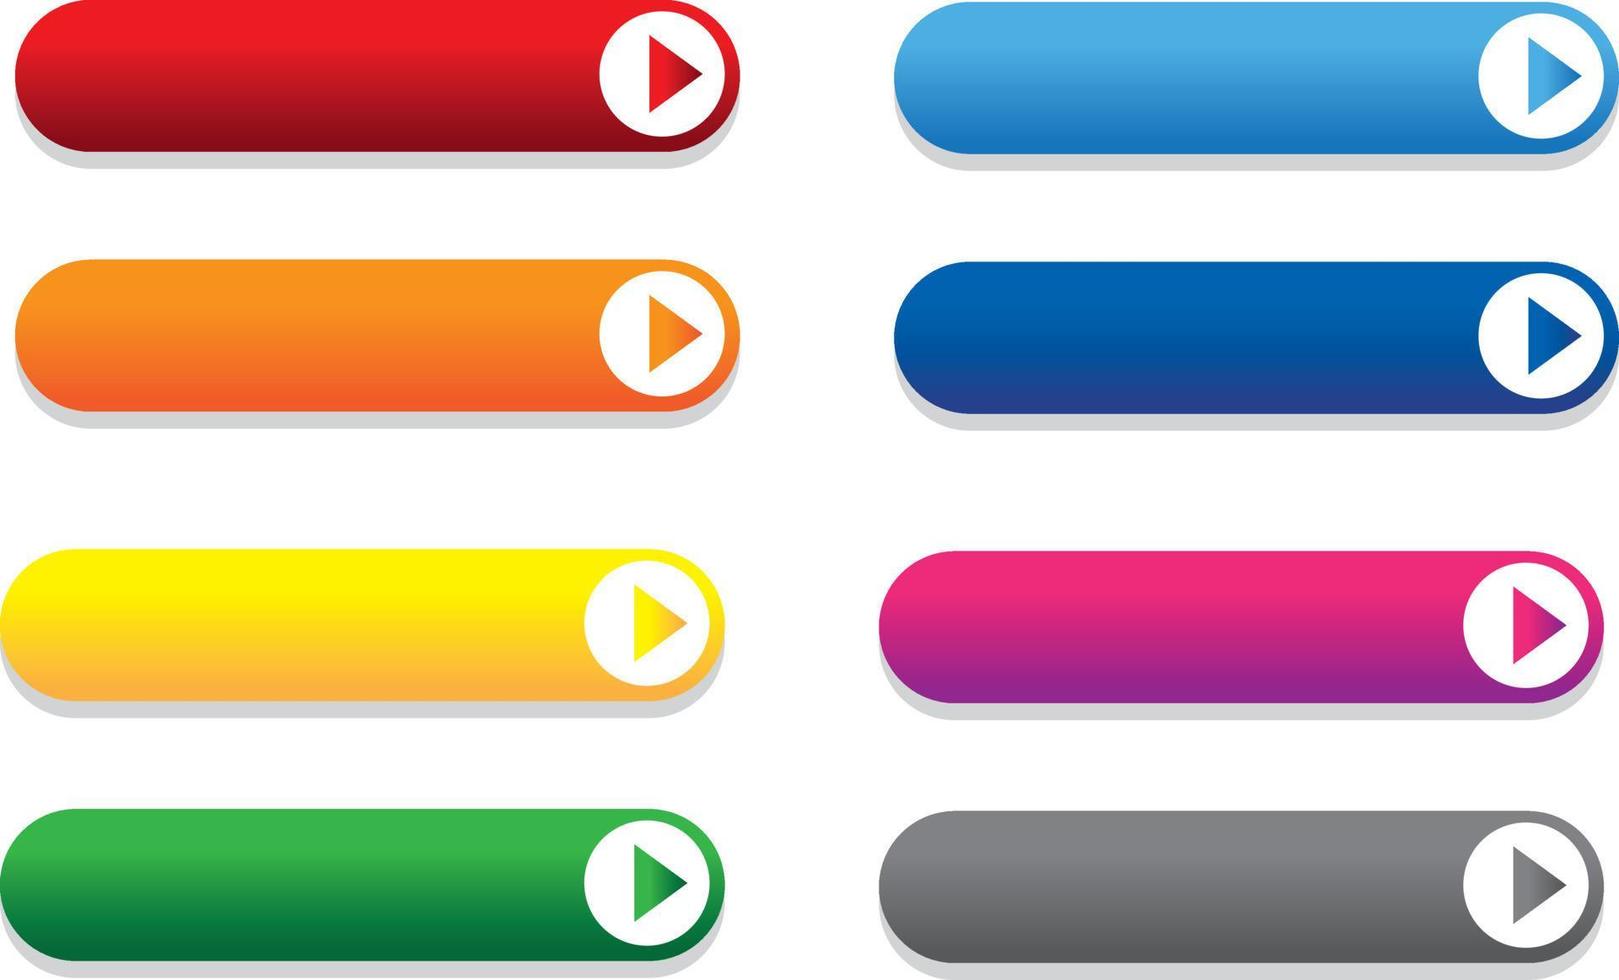 material de ilustración de conjunto de iconos de vector colorido para botón web, botón de conversión